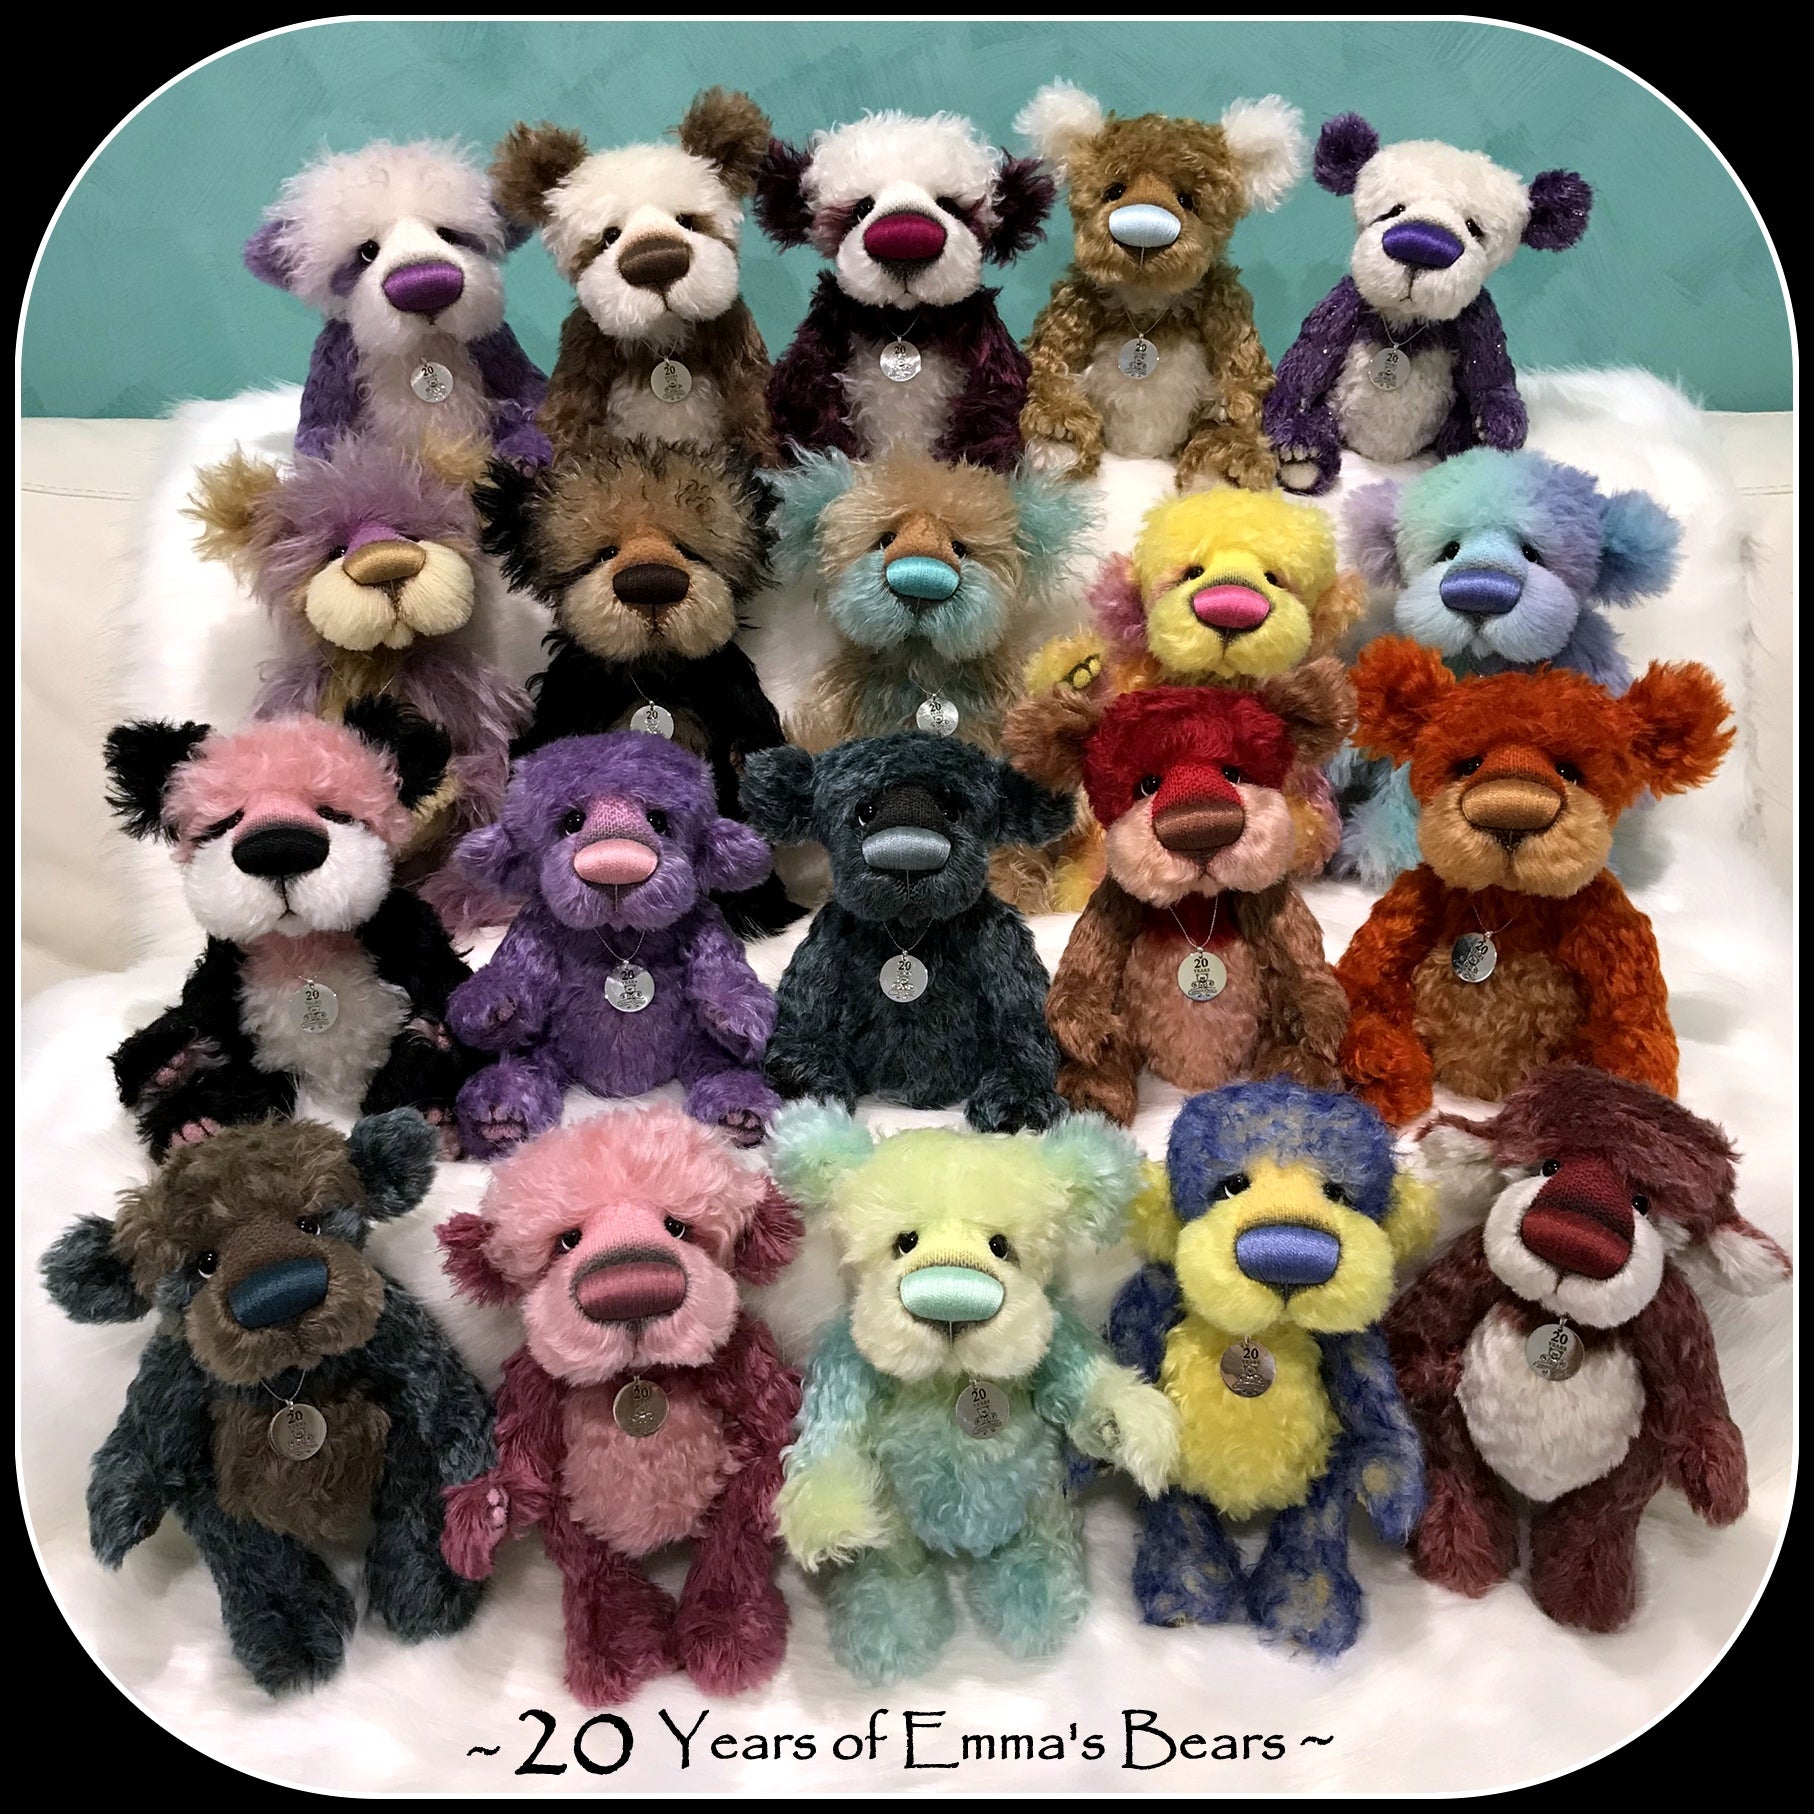 Paisley - 20 Years of Emma's Bears Commemorative Teddy - OOAK in a series